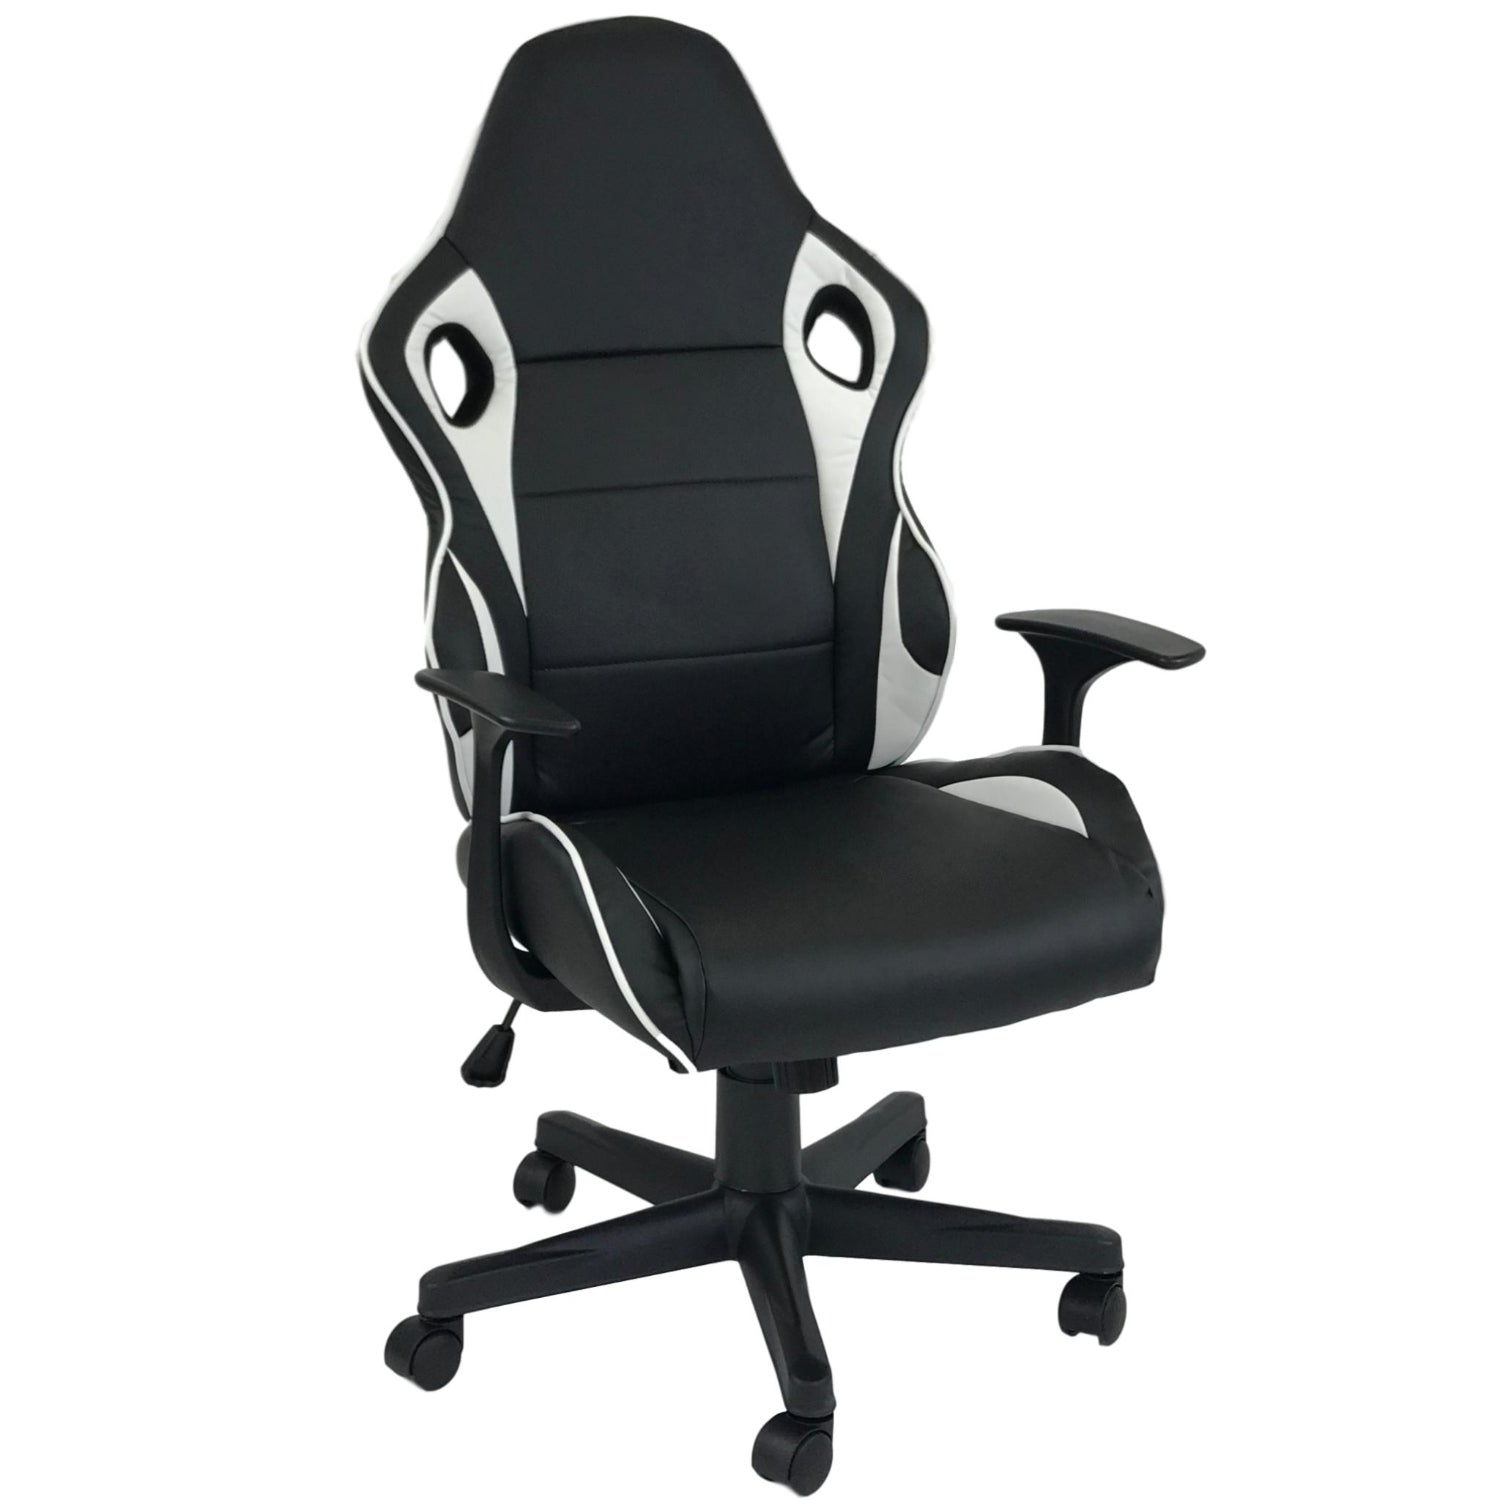 ViscoLogic Lotus Ergonomic Gaming Racing Styled Office Chair